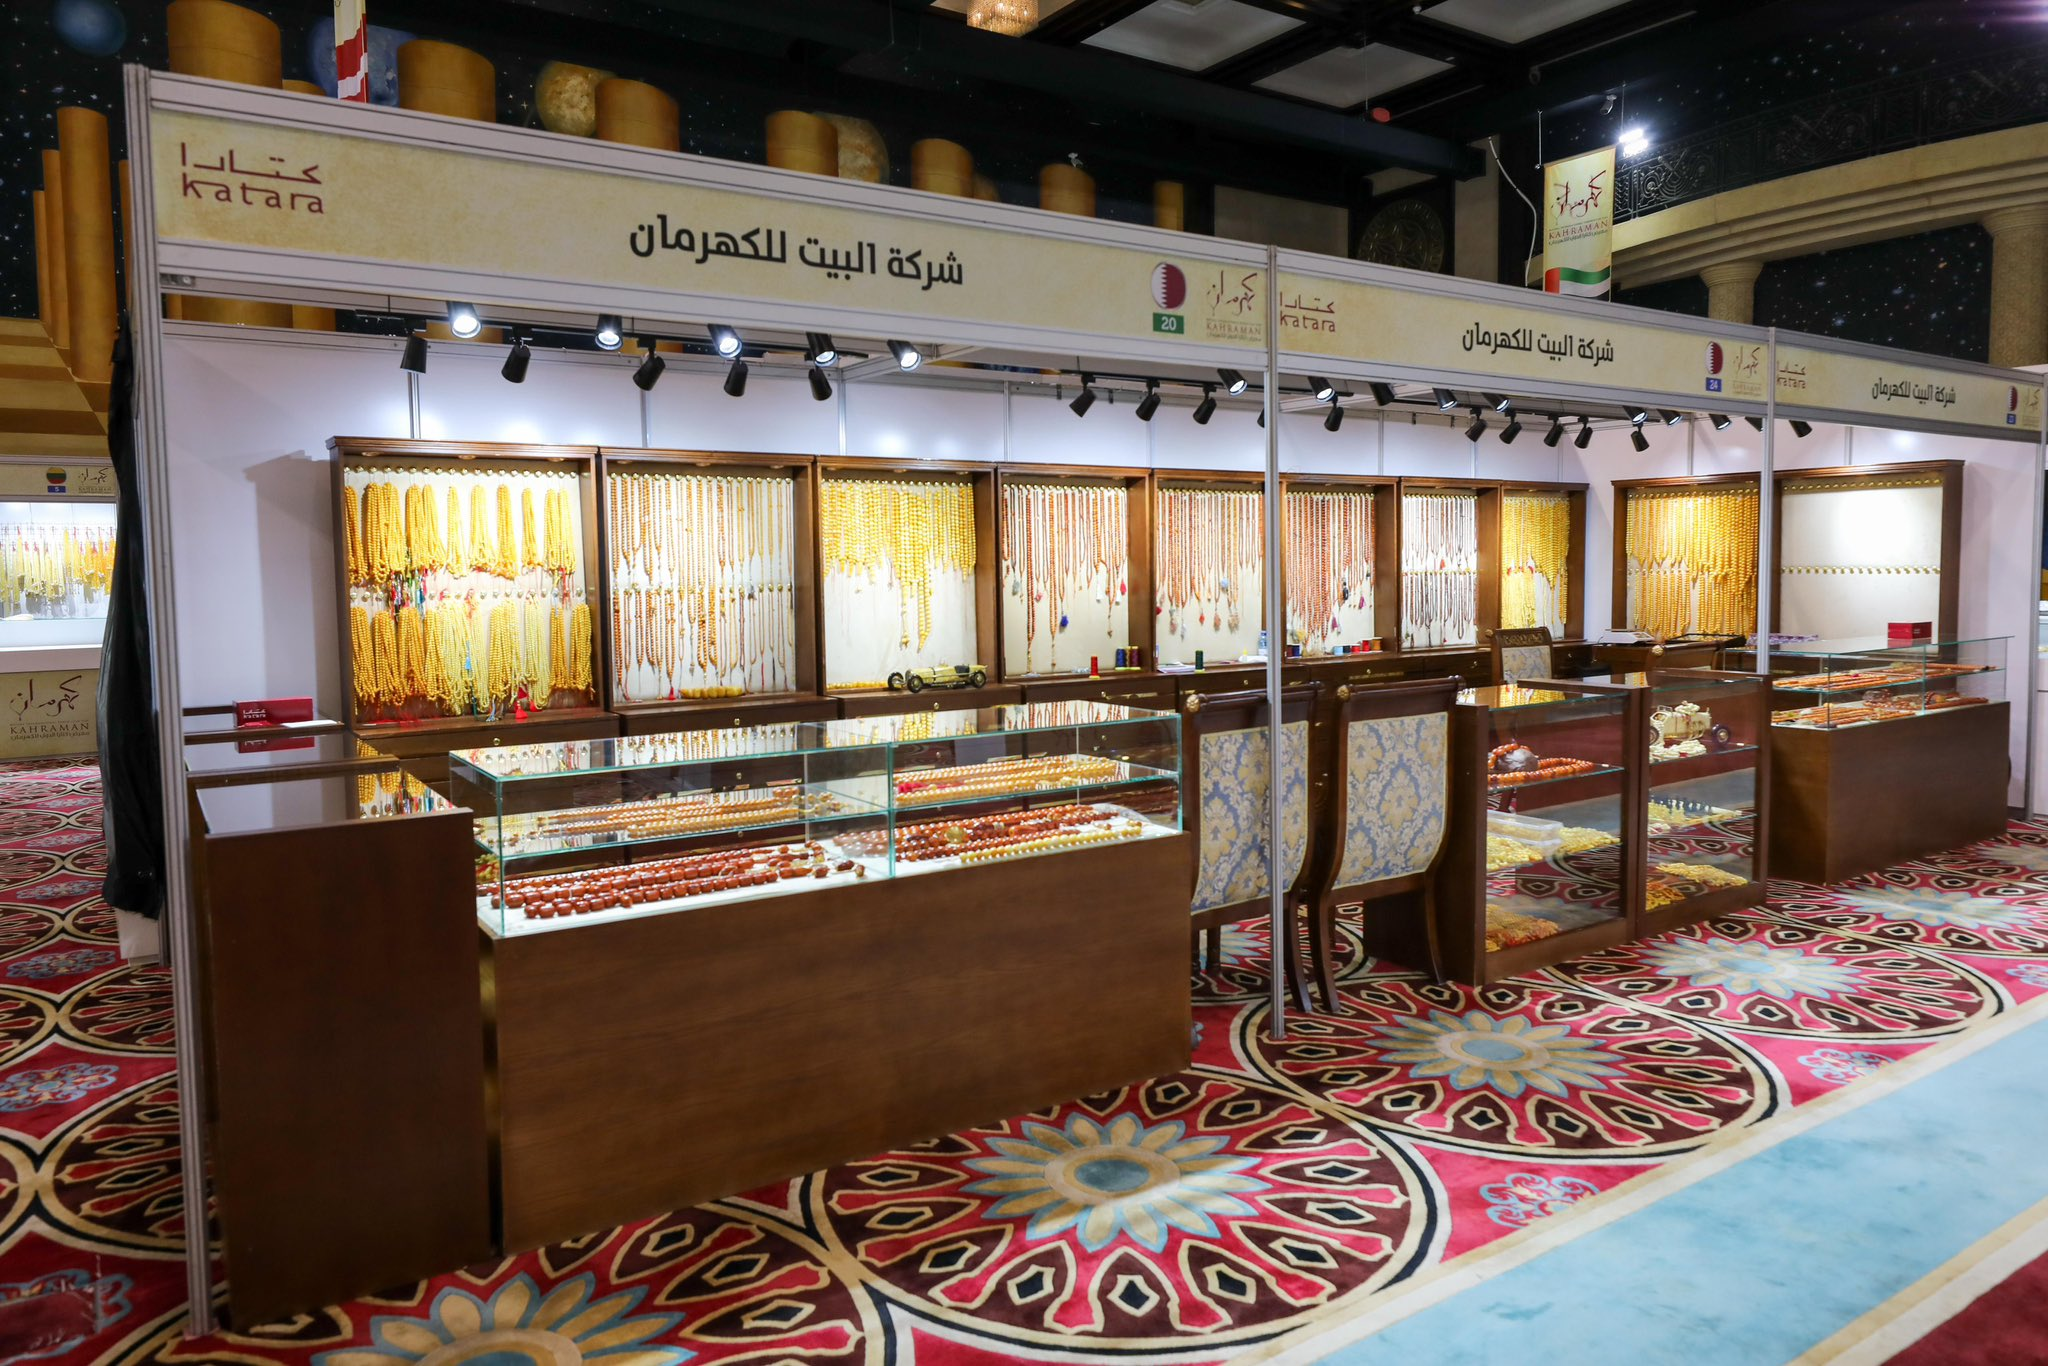 4th Katara International Exhibition for Kahraman Opens at Katara